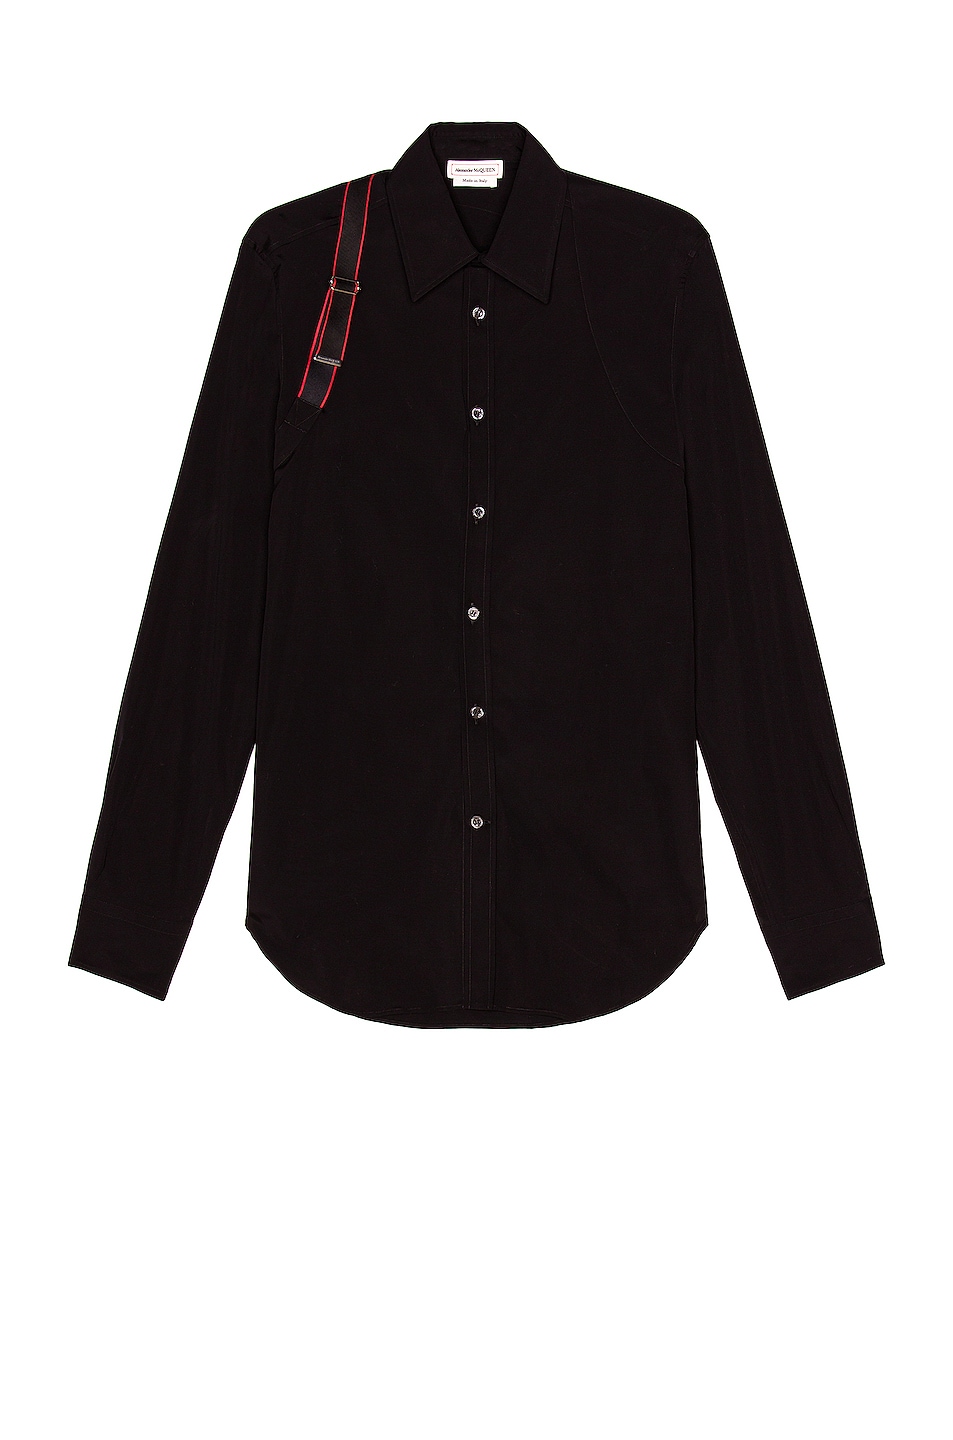 Alexander McQueen Logo Tape Harness Shirt in Black | FWRD